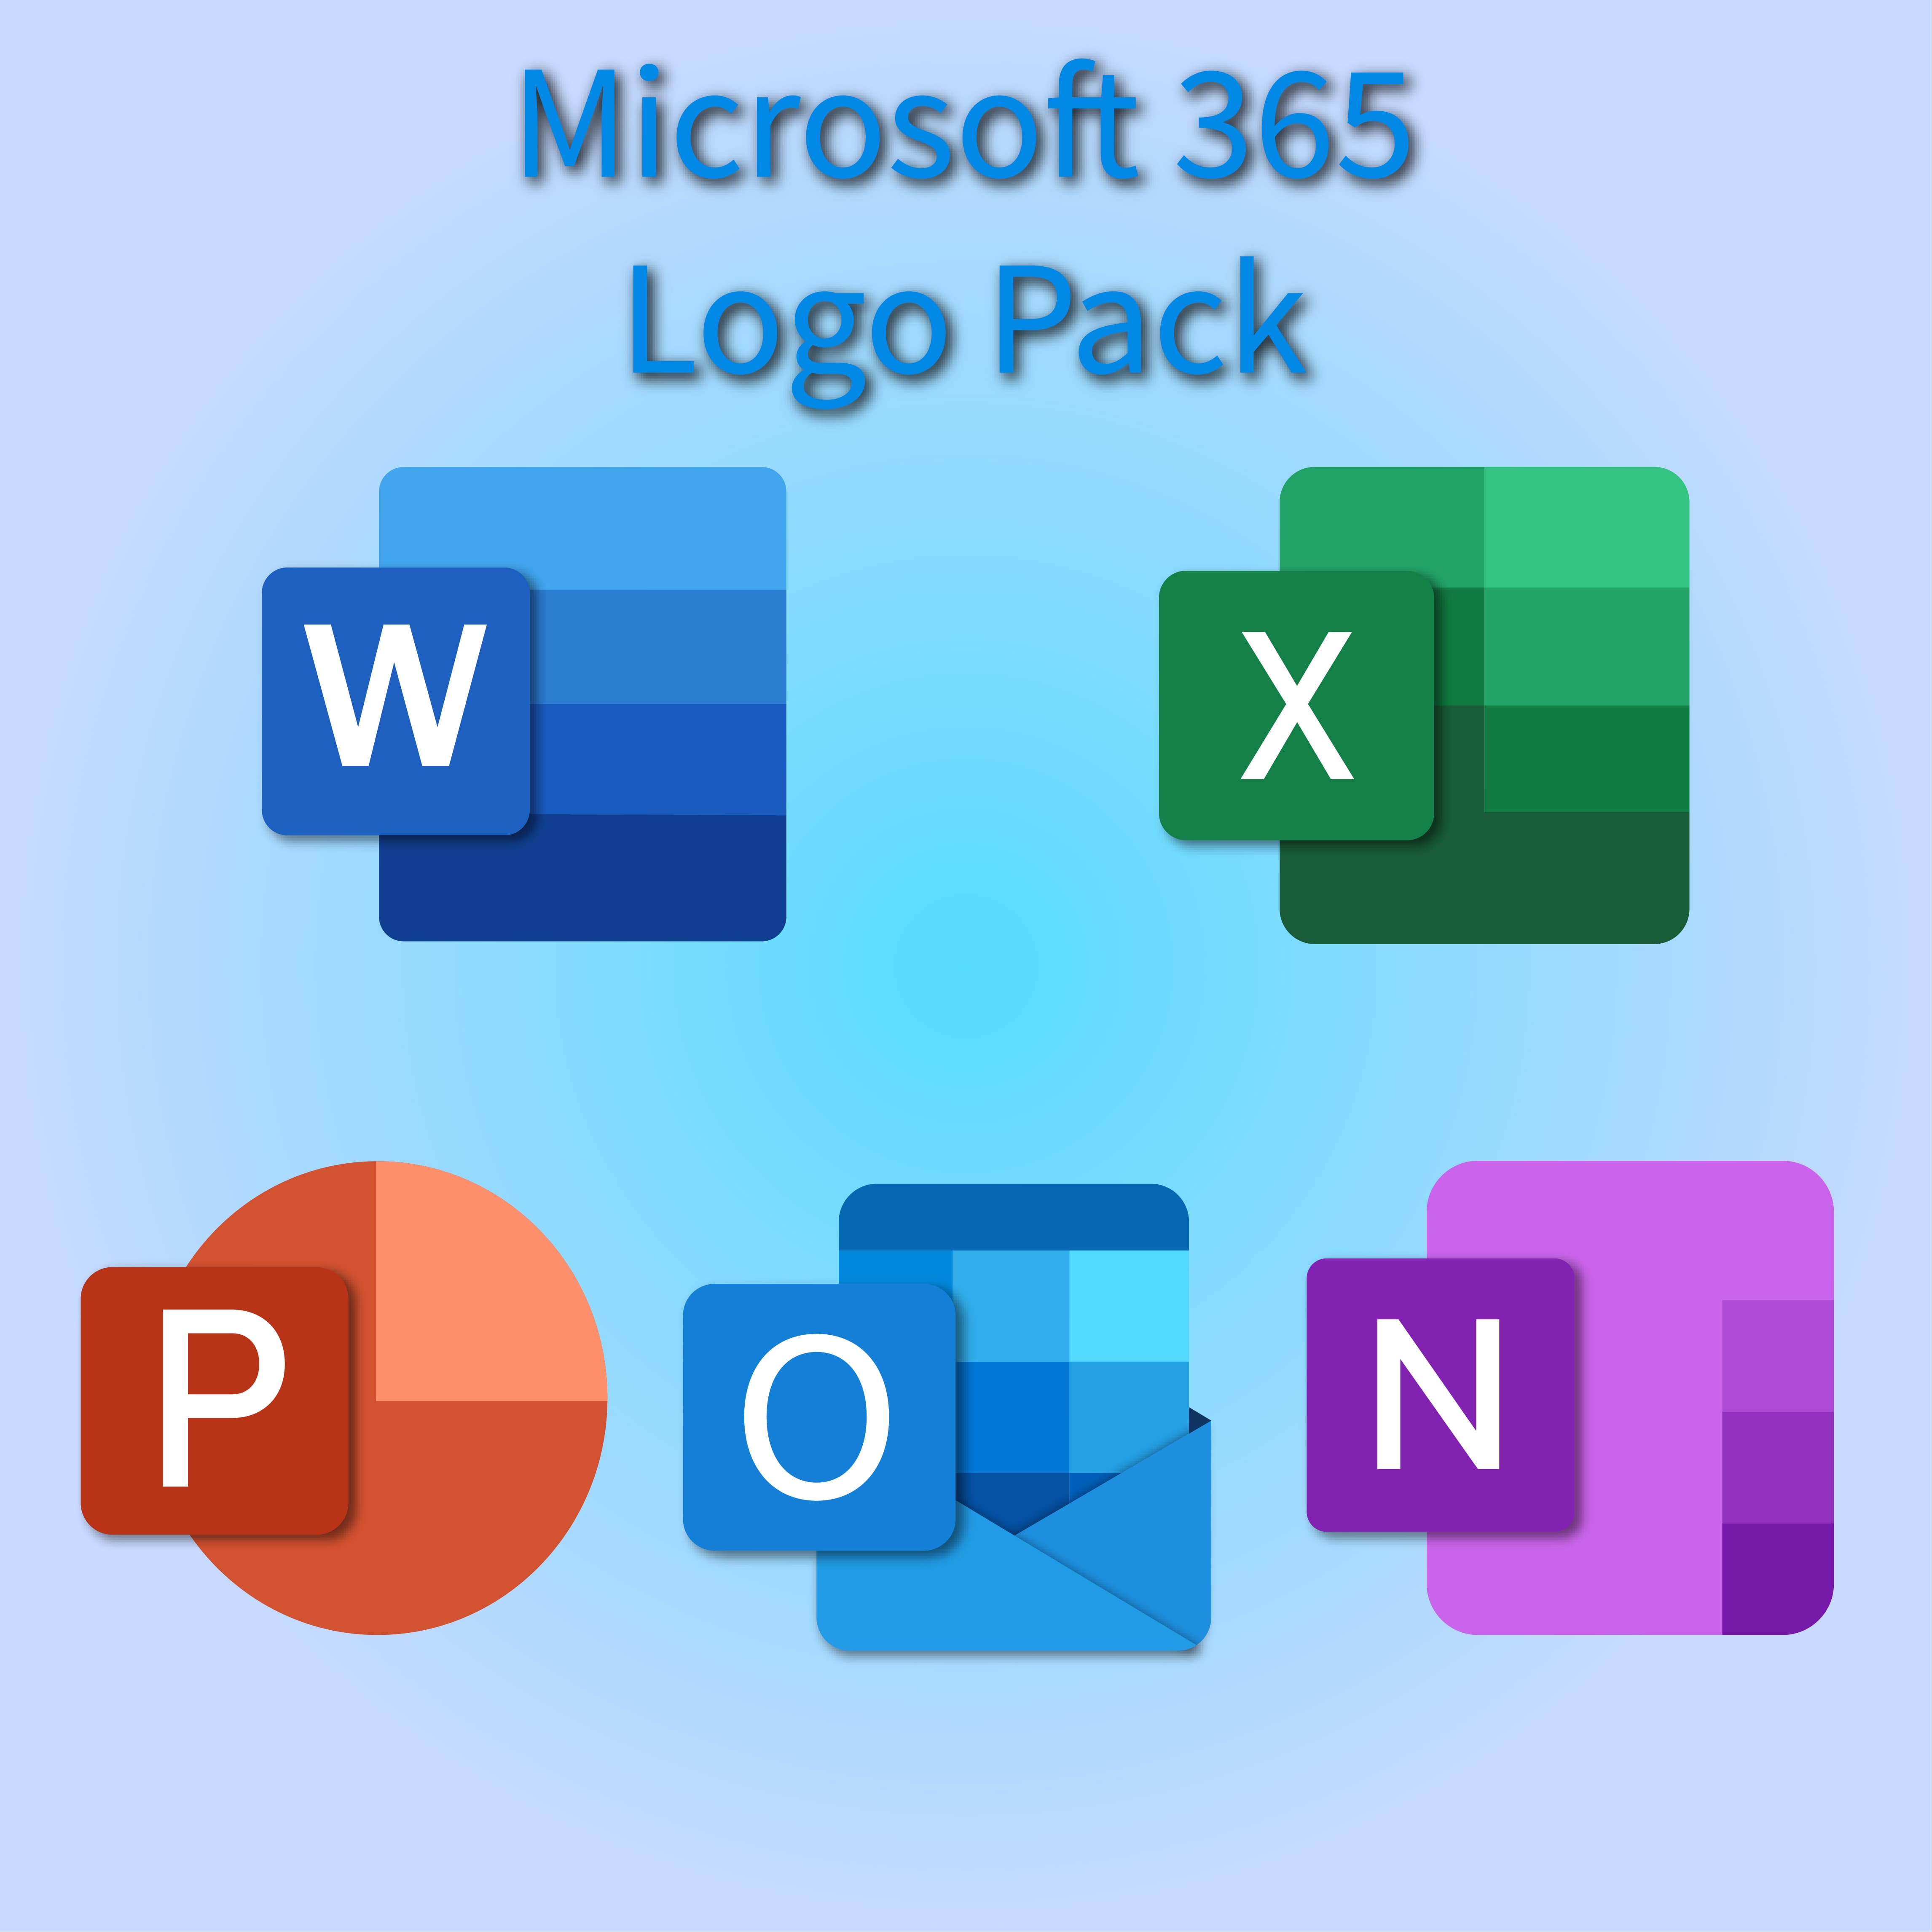 Microsoft 365 Logos Pack preview image.